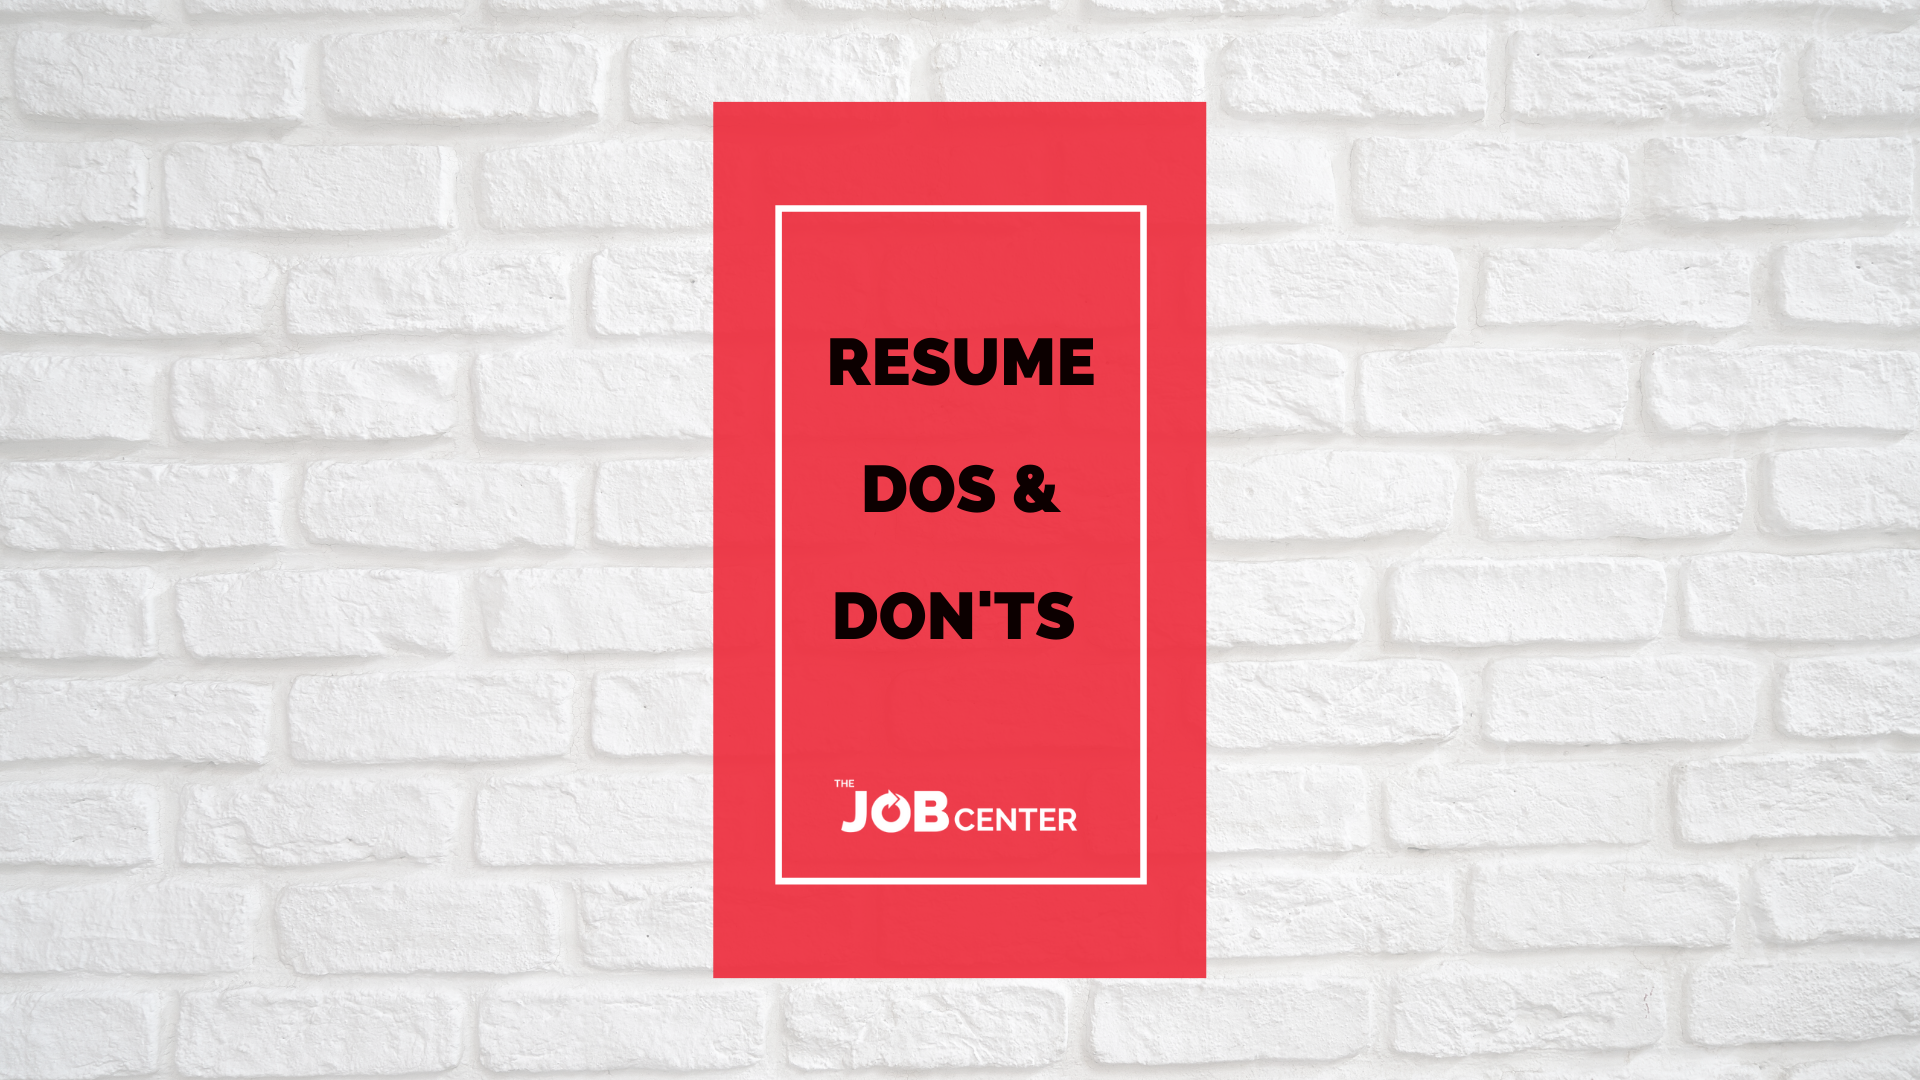 Resume Dos & Don’ts